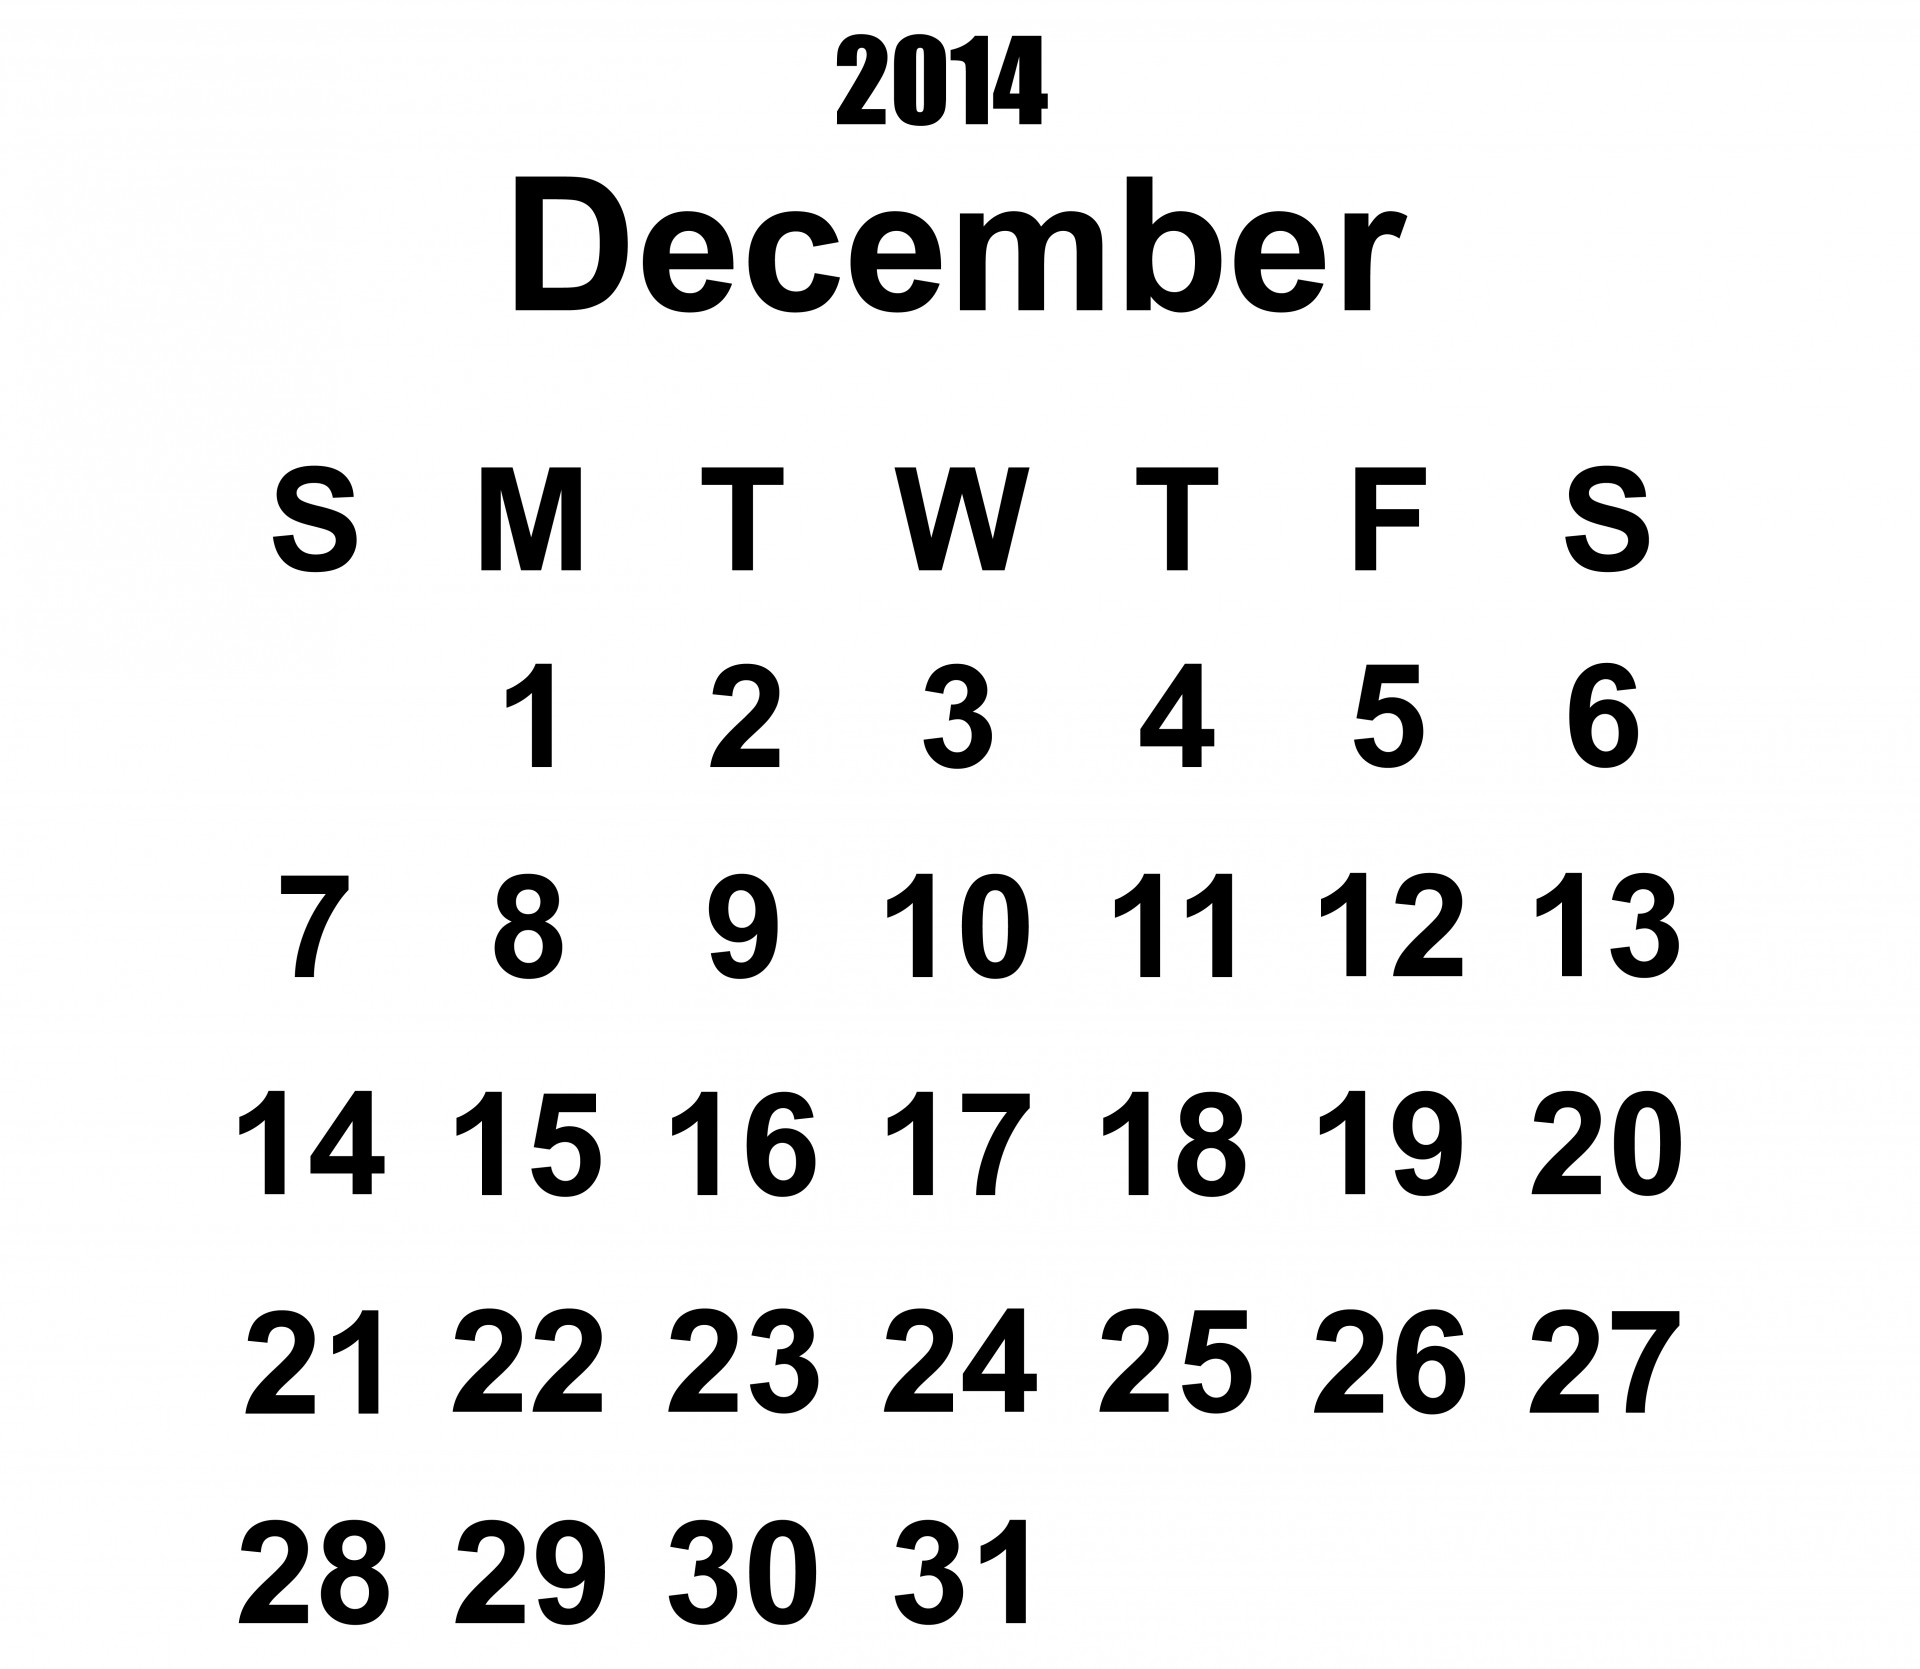 2014 calendar december 2014 calendar 2014 free photo